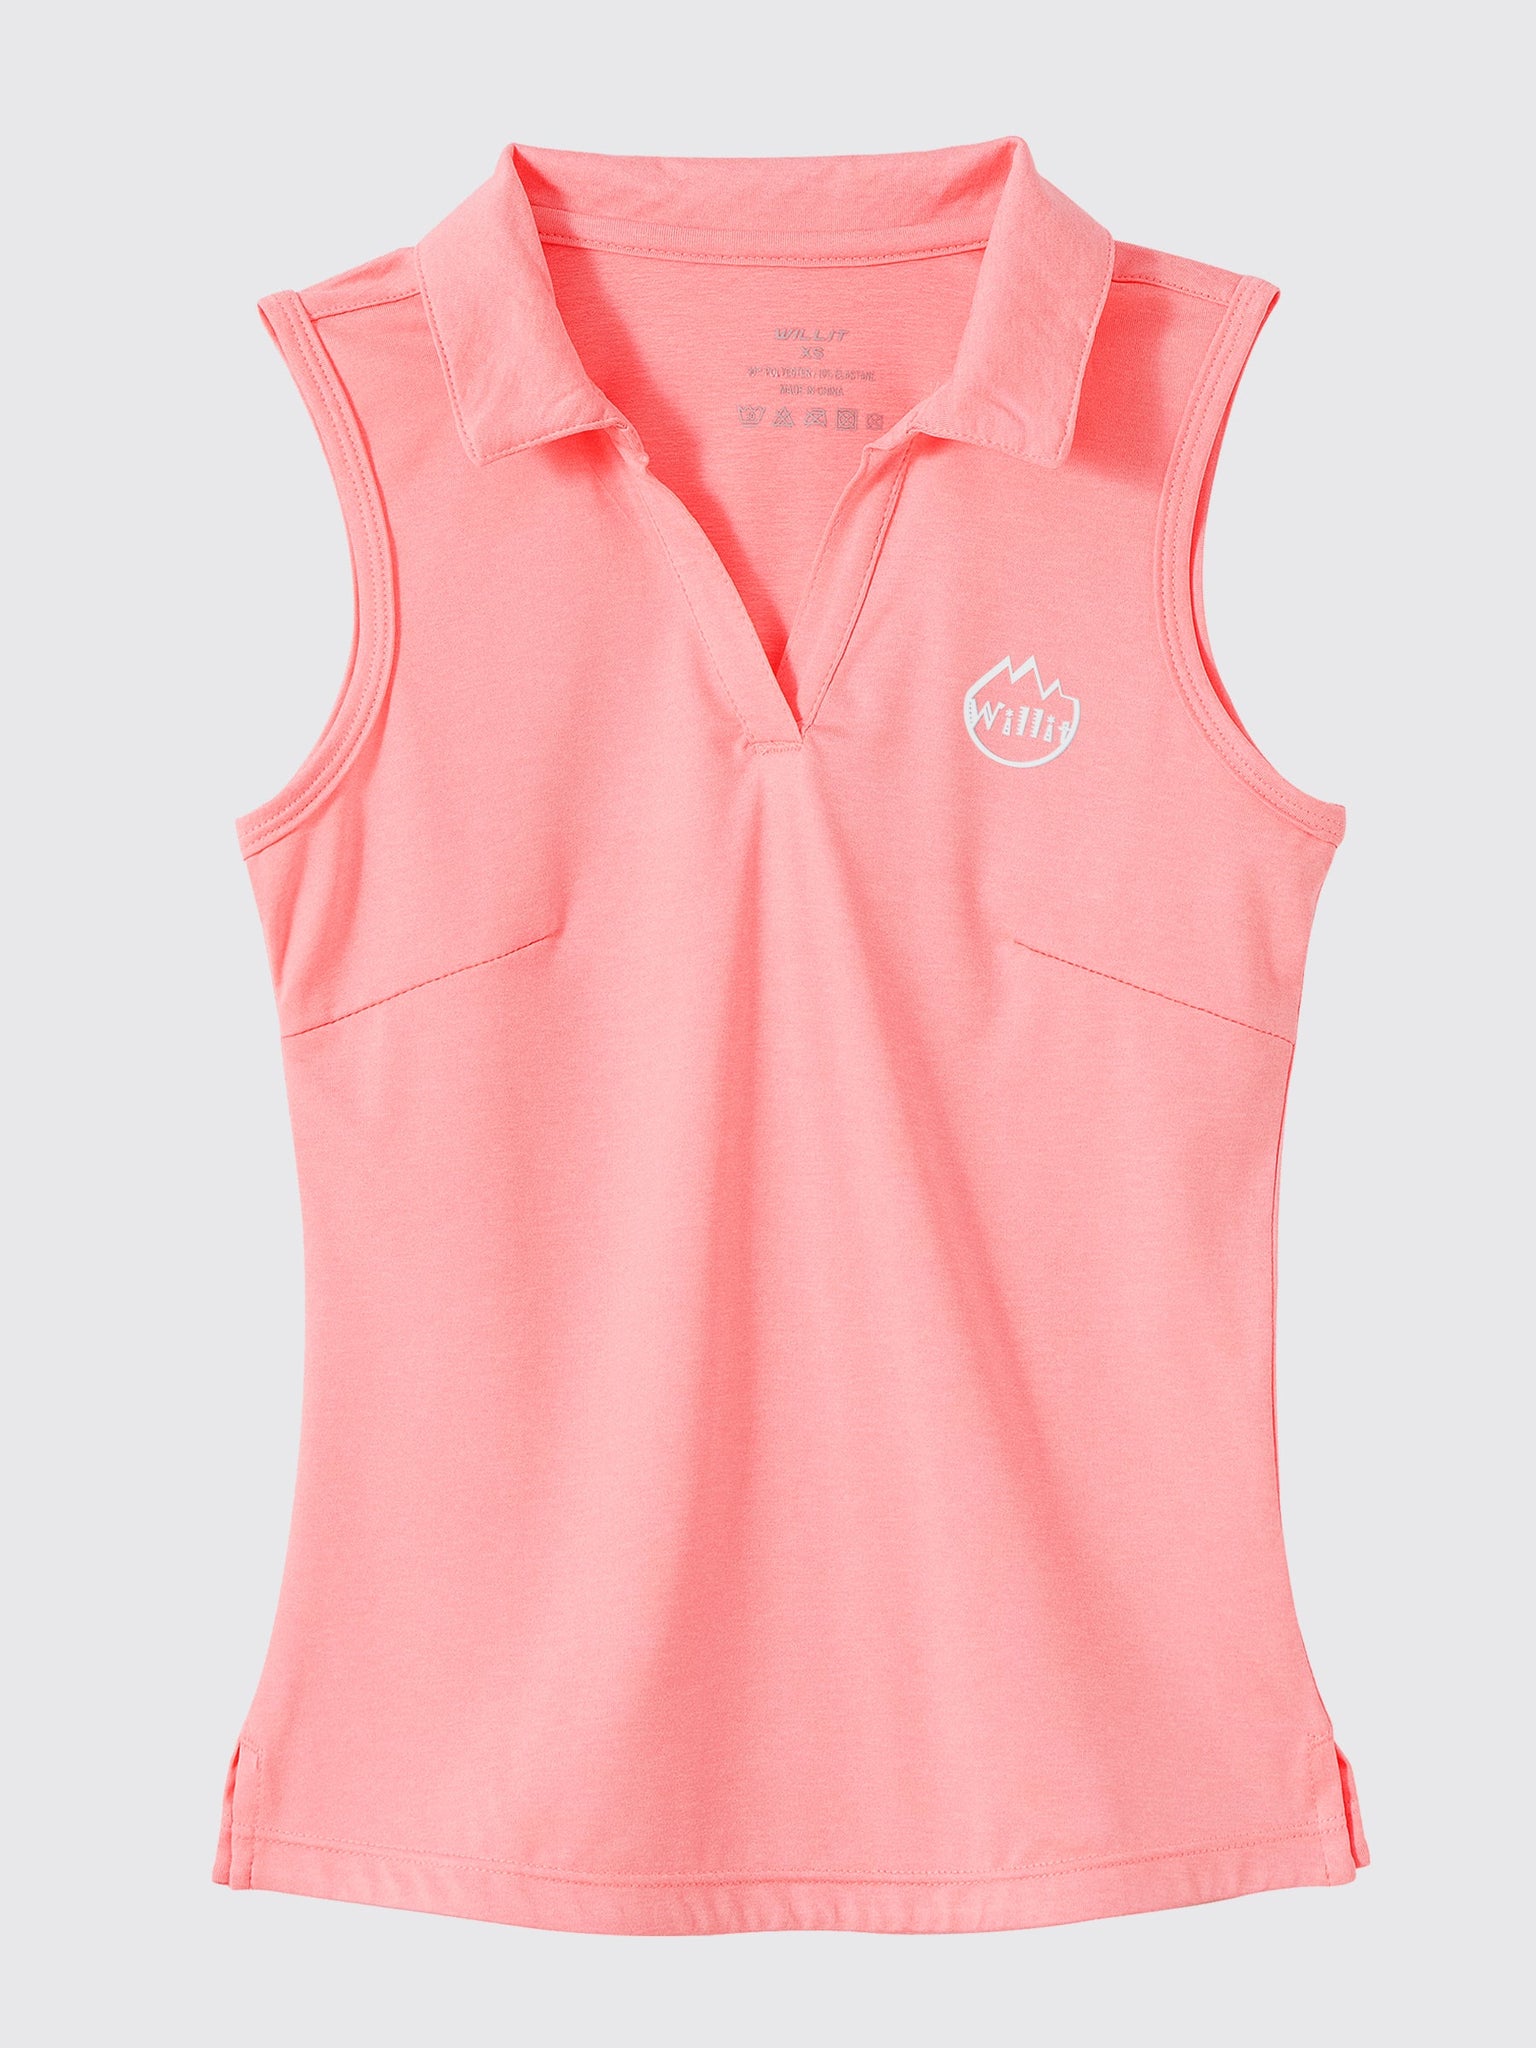 Willit Girls' Sleeveless Polo Shirts_Pink2